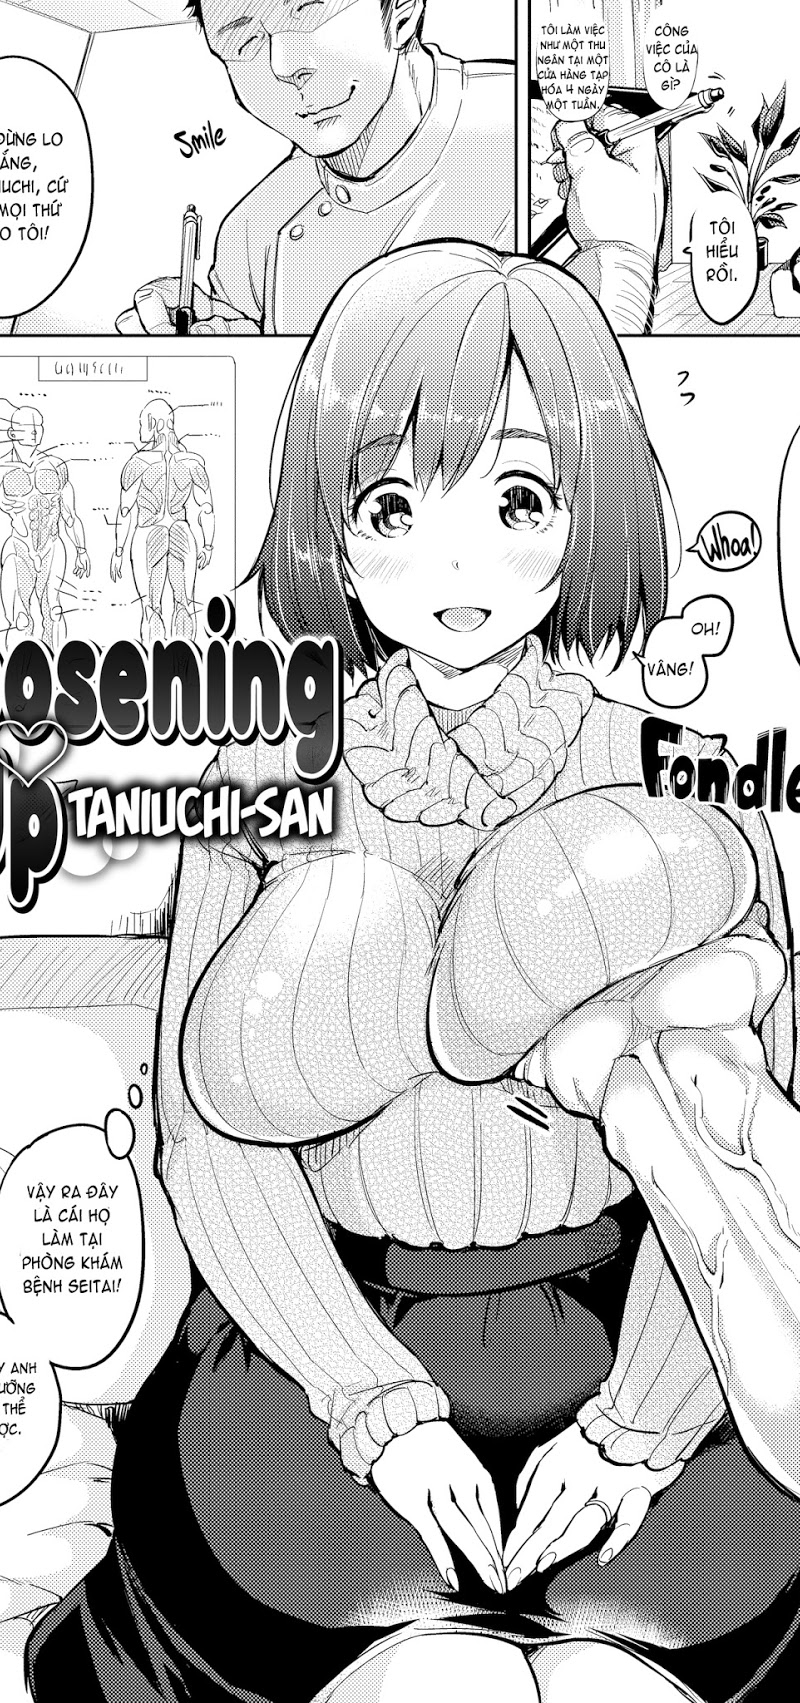 Let Loose with Lewd Boobs! Chapter 12: Loosening Up Taniuchi-san [End] - Trang 2